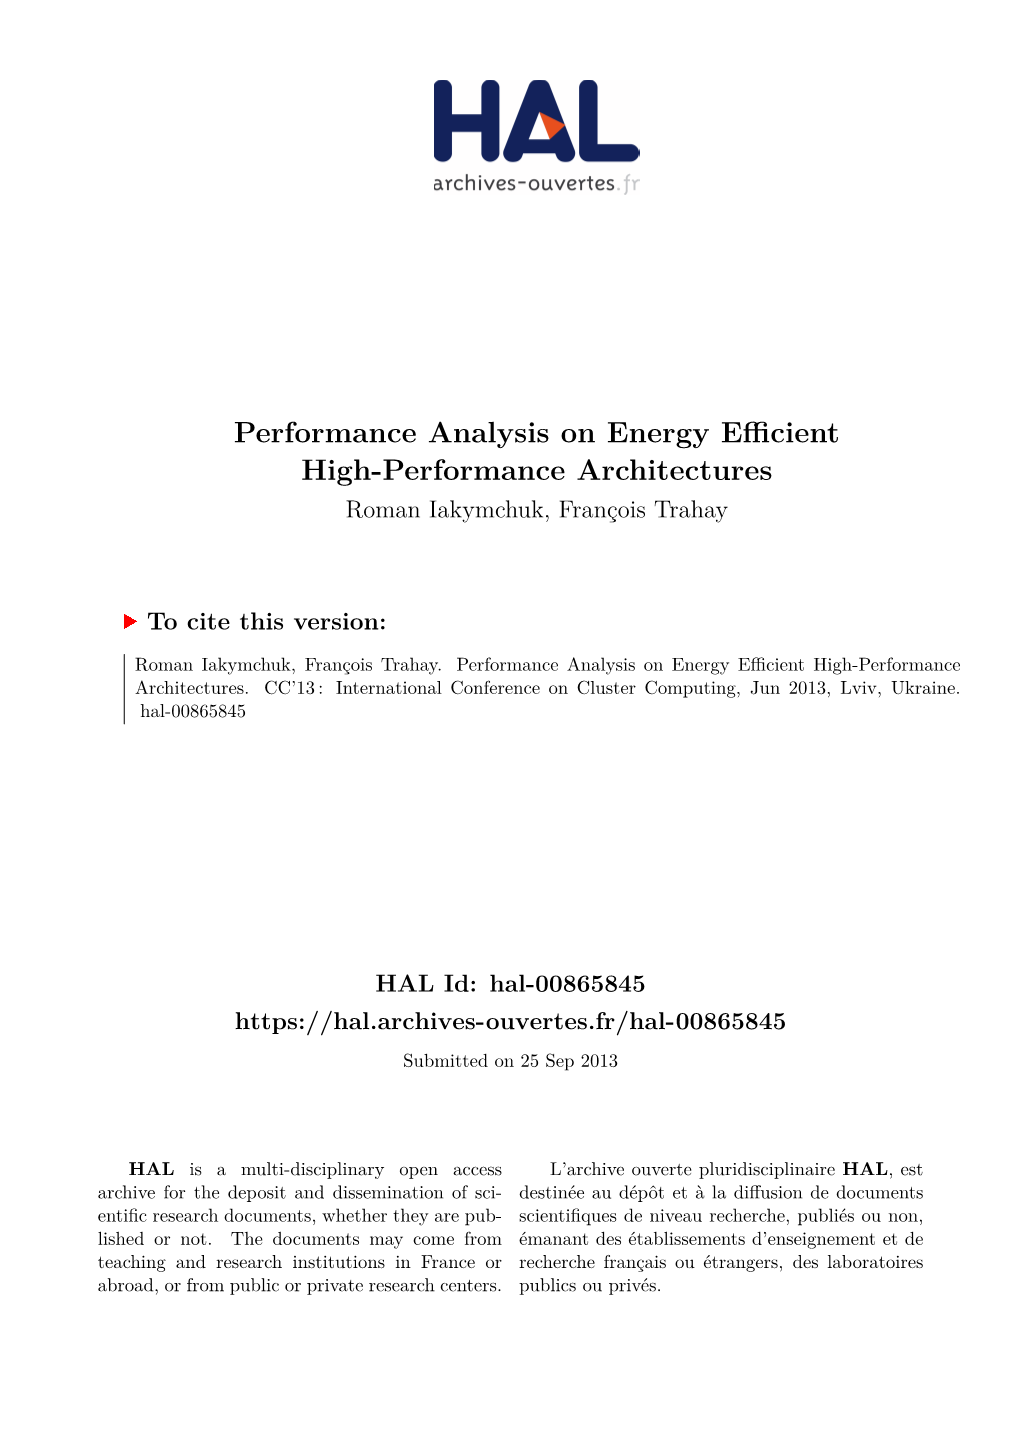 Performance Analysis on Energy Efficient High